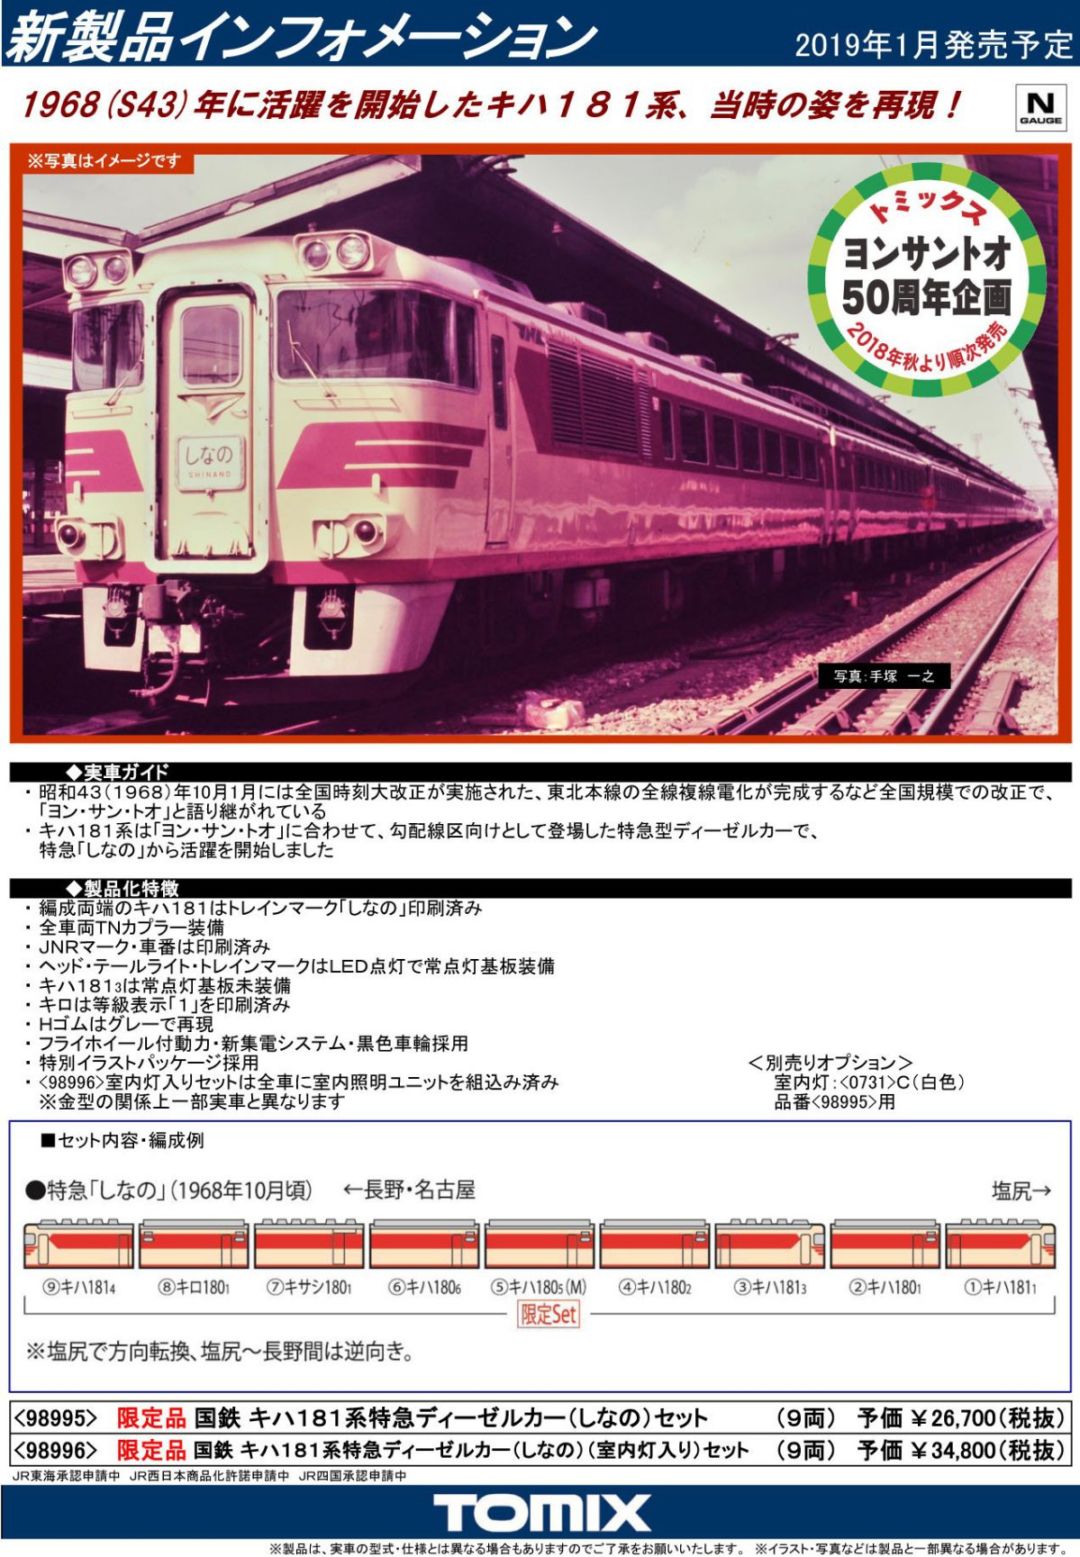 TOMIX】新製品発表 2019年01月 トミックス ☆彡 横浜模型 #鉄道模型 #N